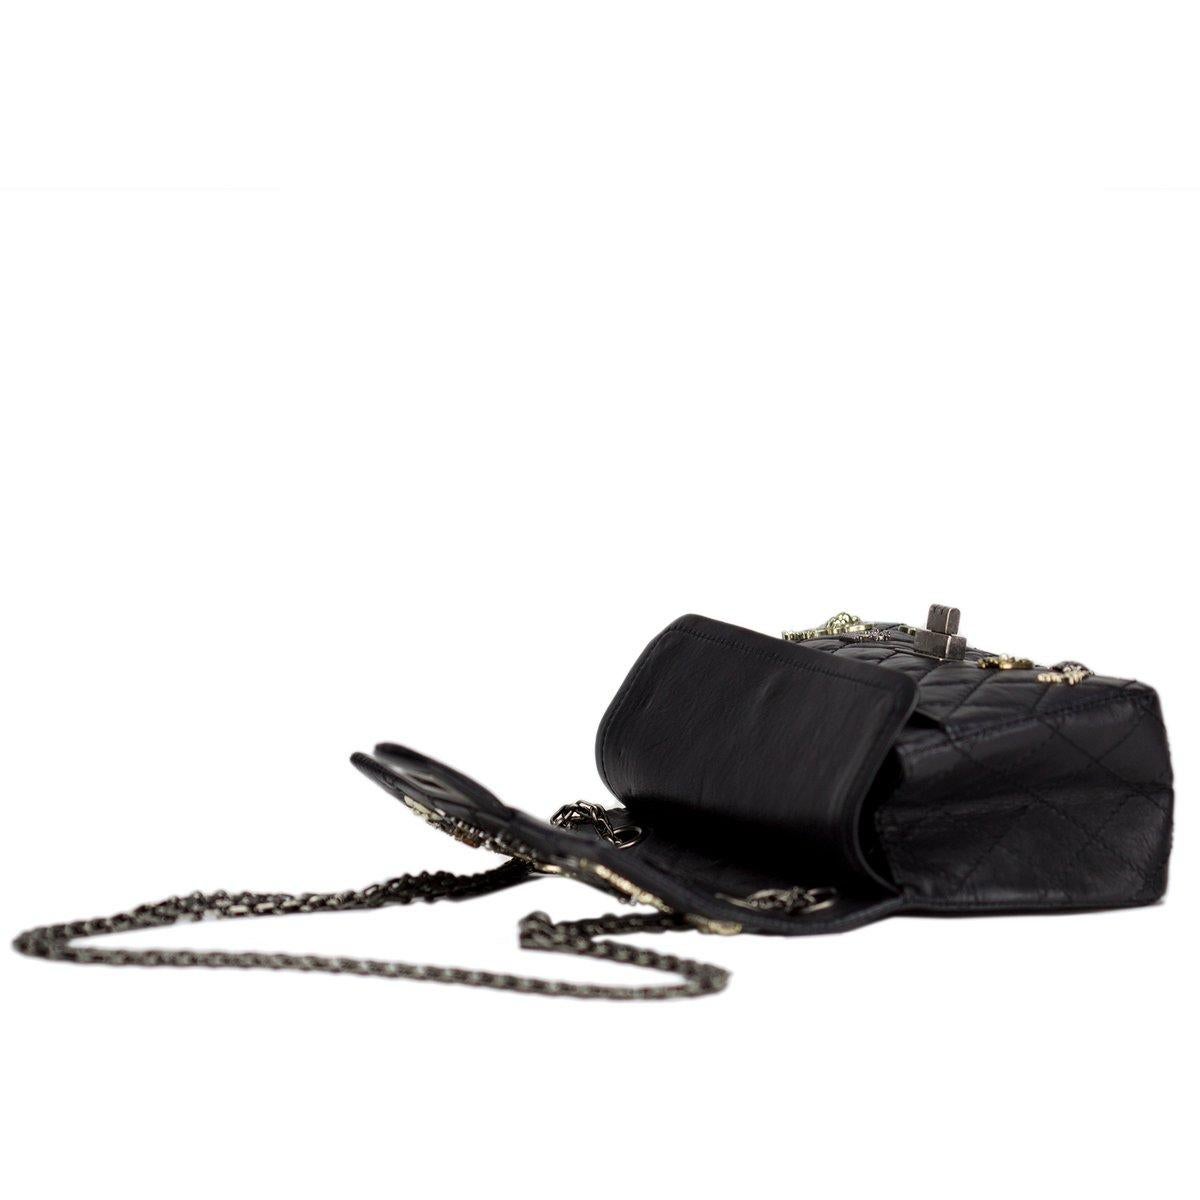 Chanel 2012 Small Reissue Charm Paris Icons Mini Flap Bag Limited Edition Bag 2